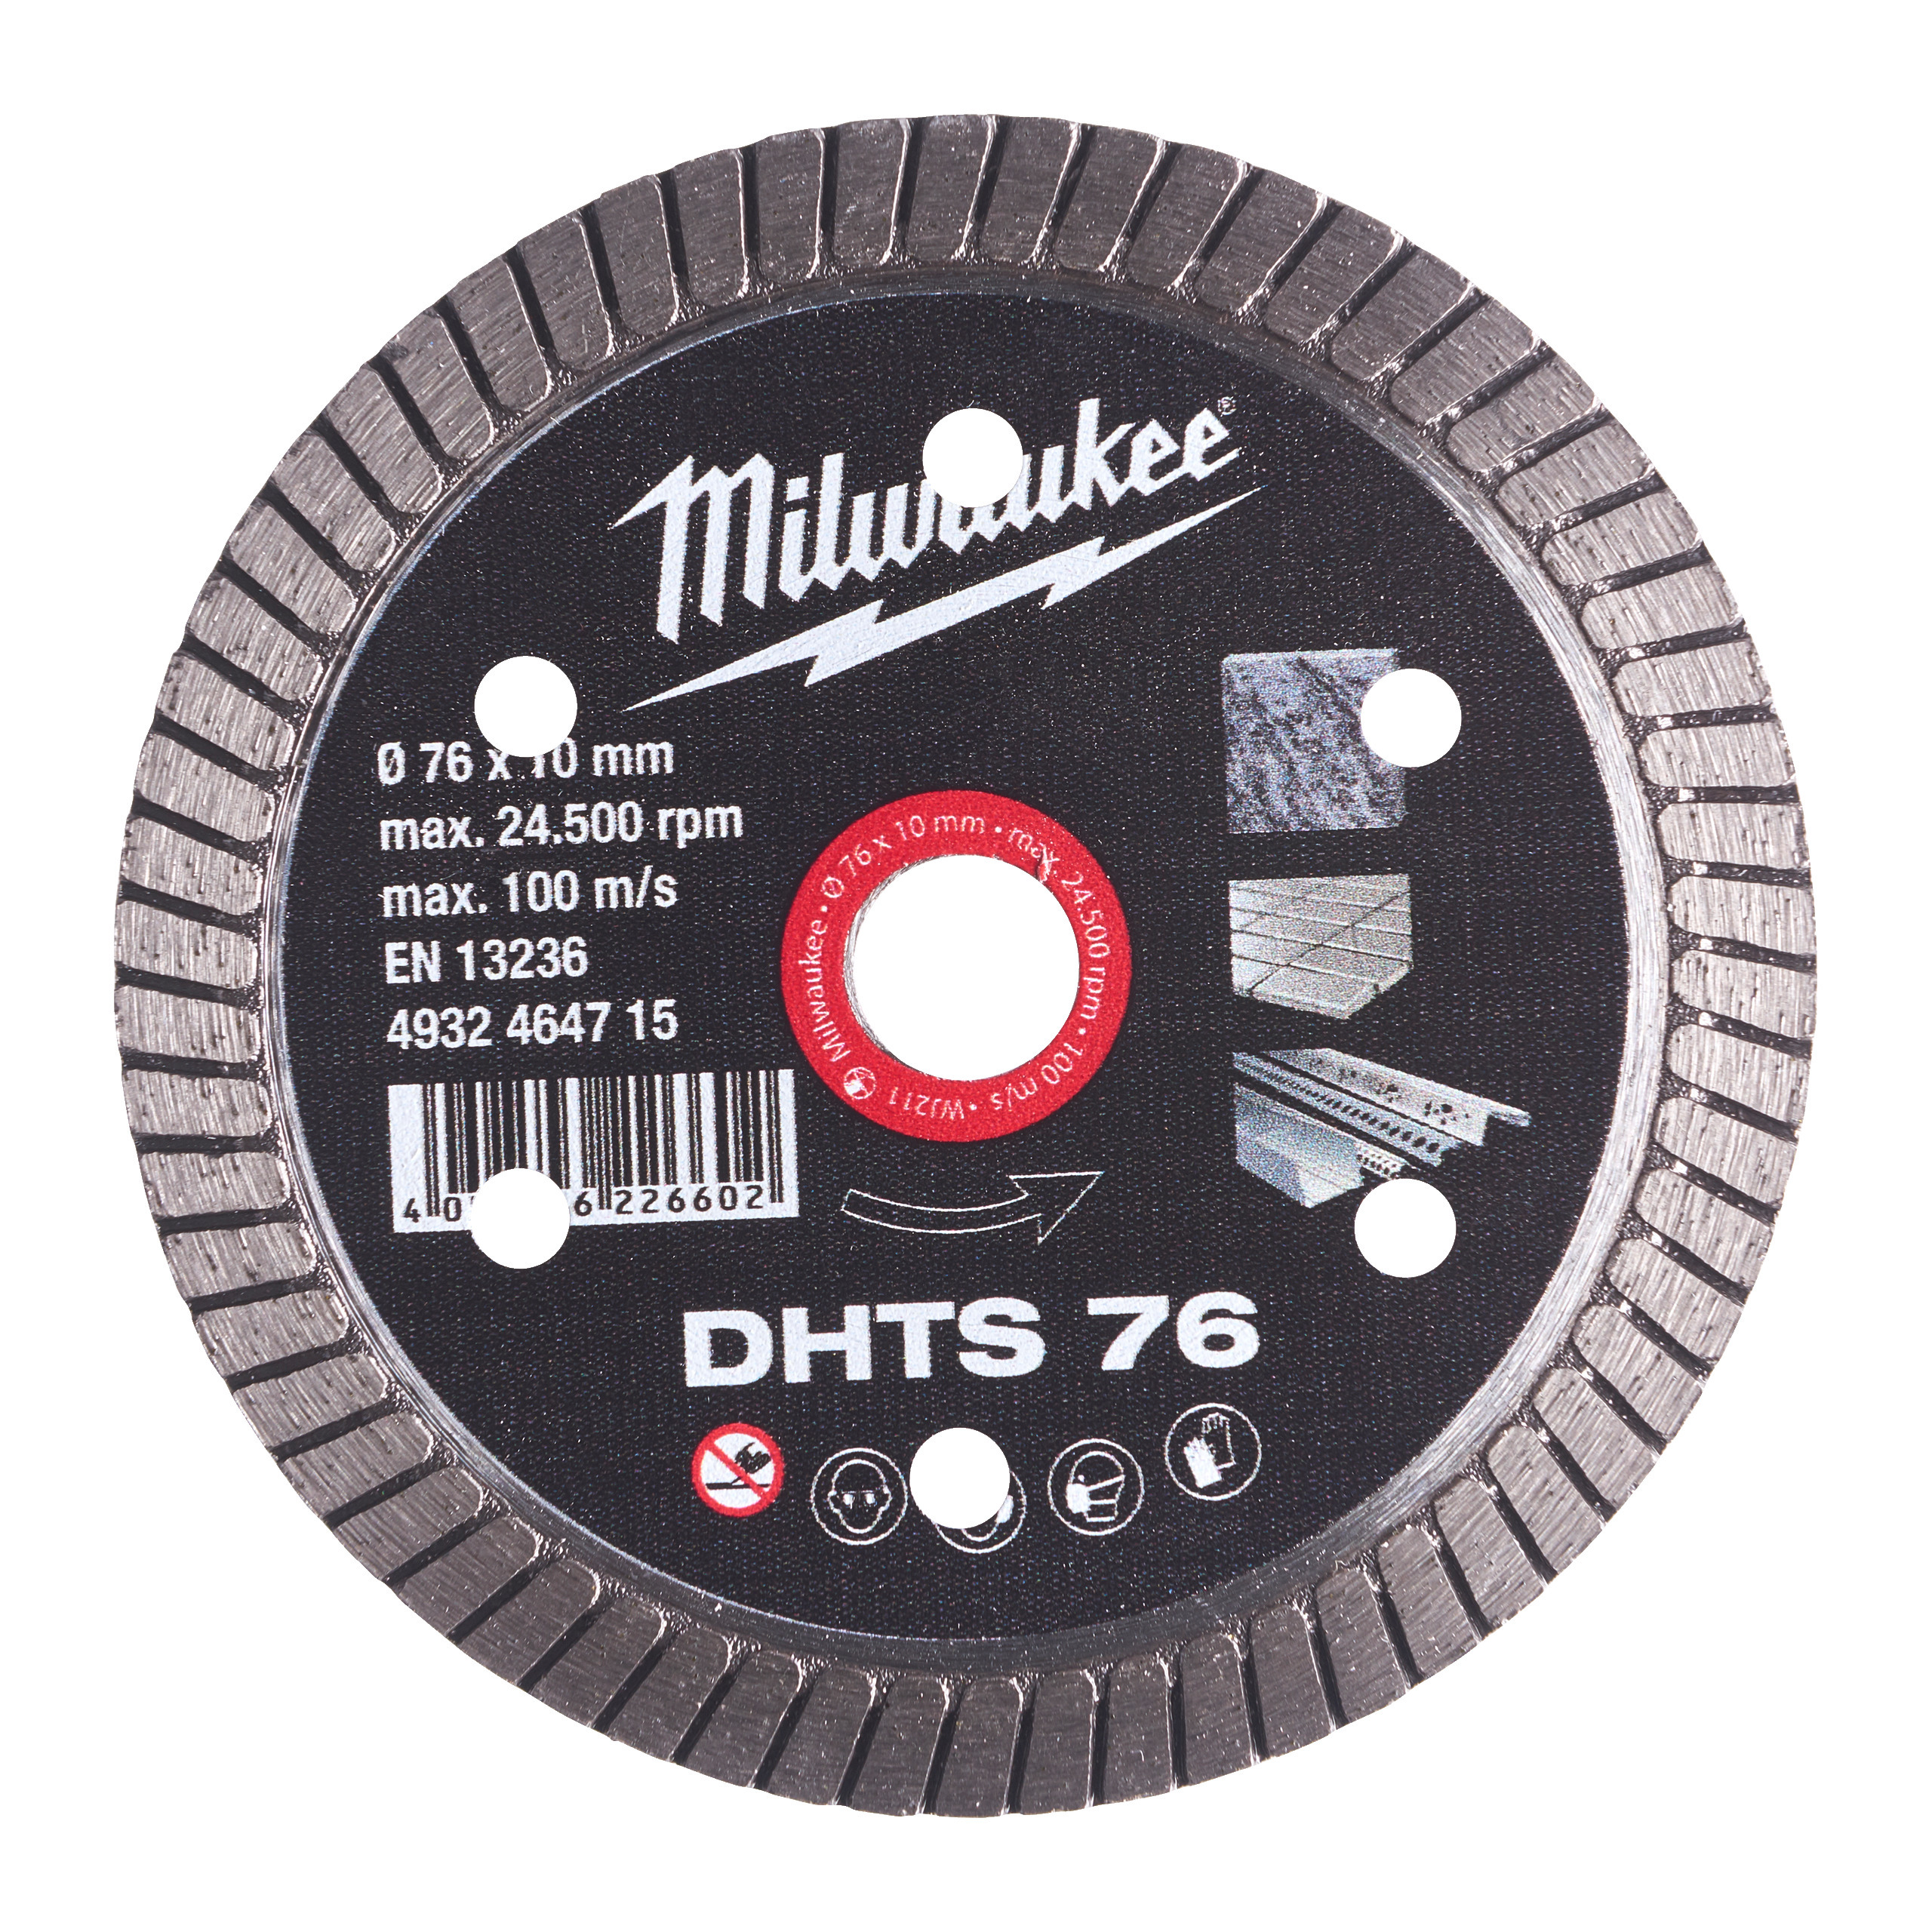 Disque diamand DHTS 76 - 1 pc MILWAUKEE ACCESSOIRES - 4932464715